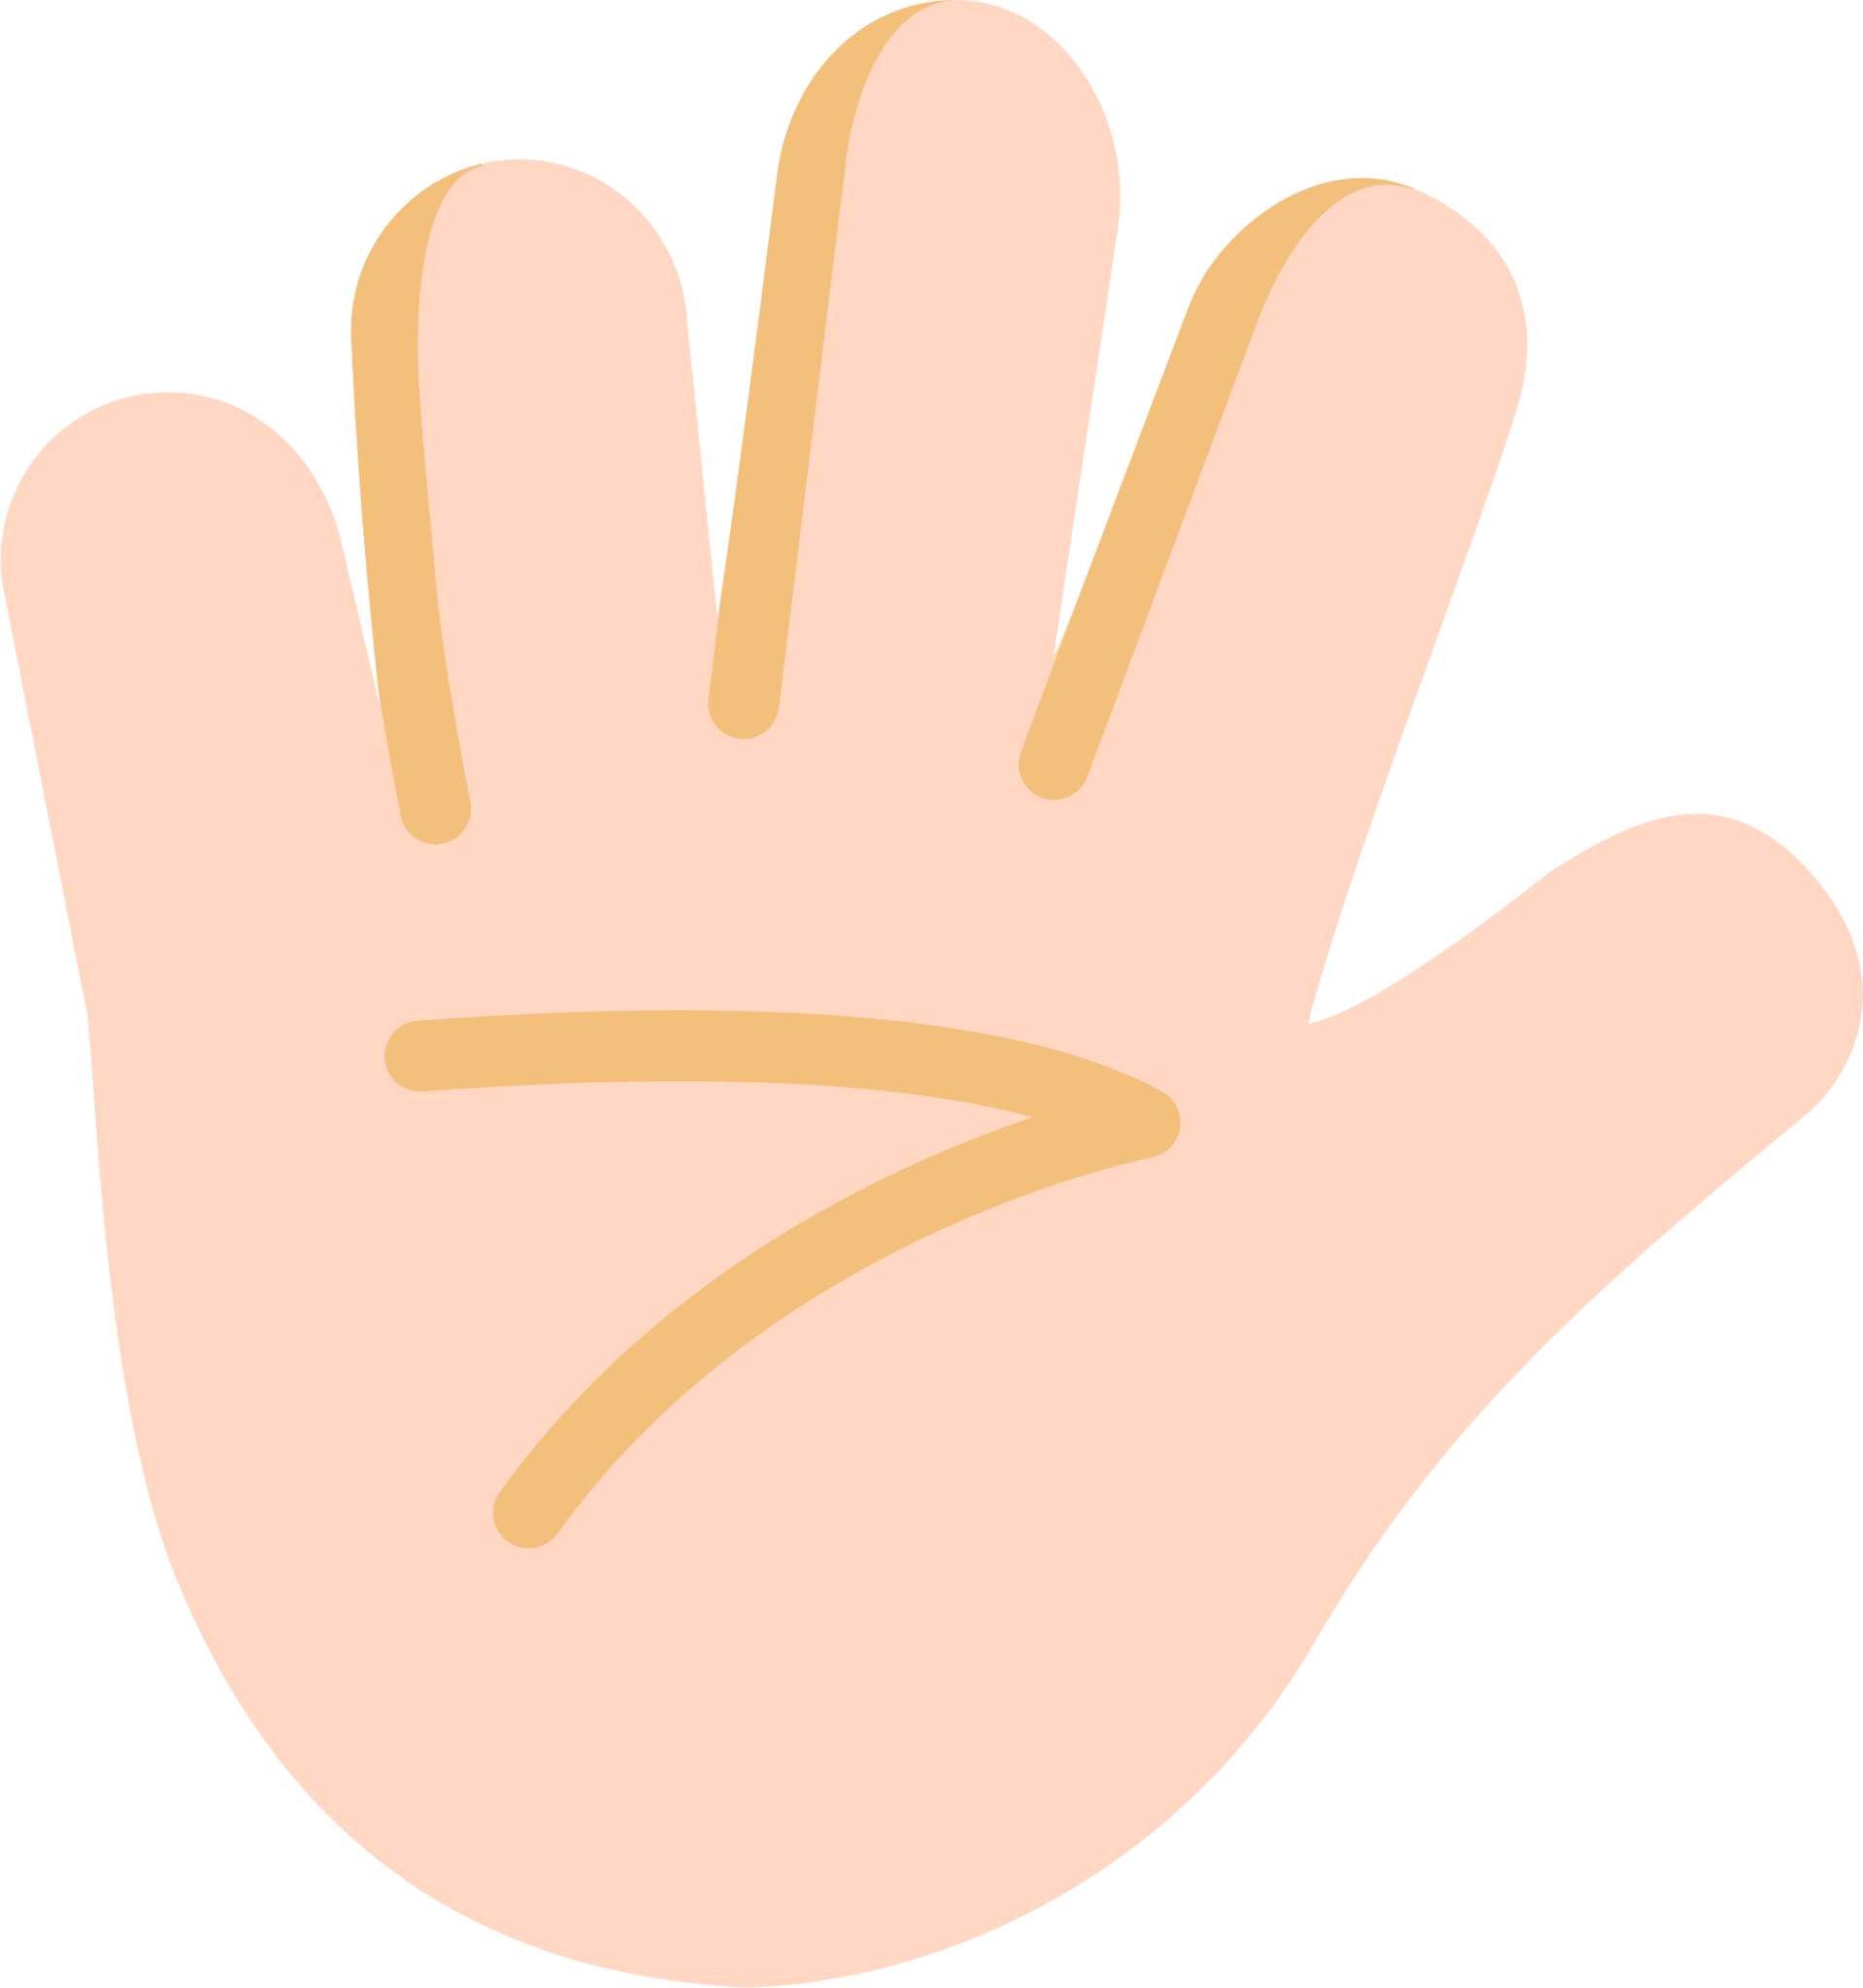 hand with fingers splayed light emoji